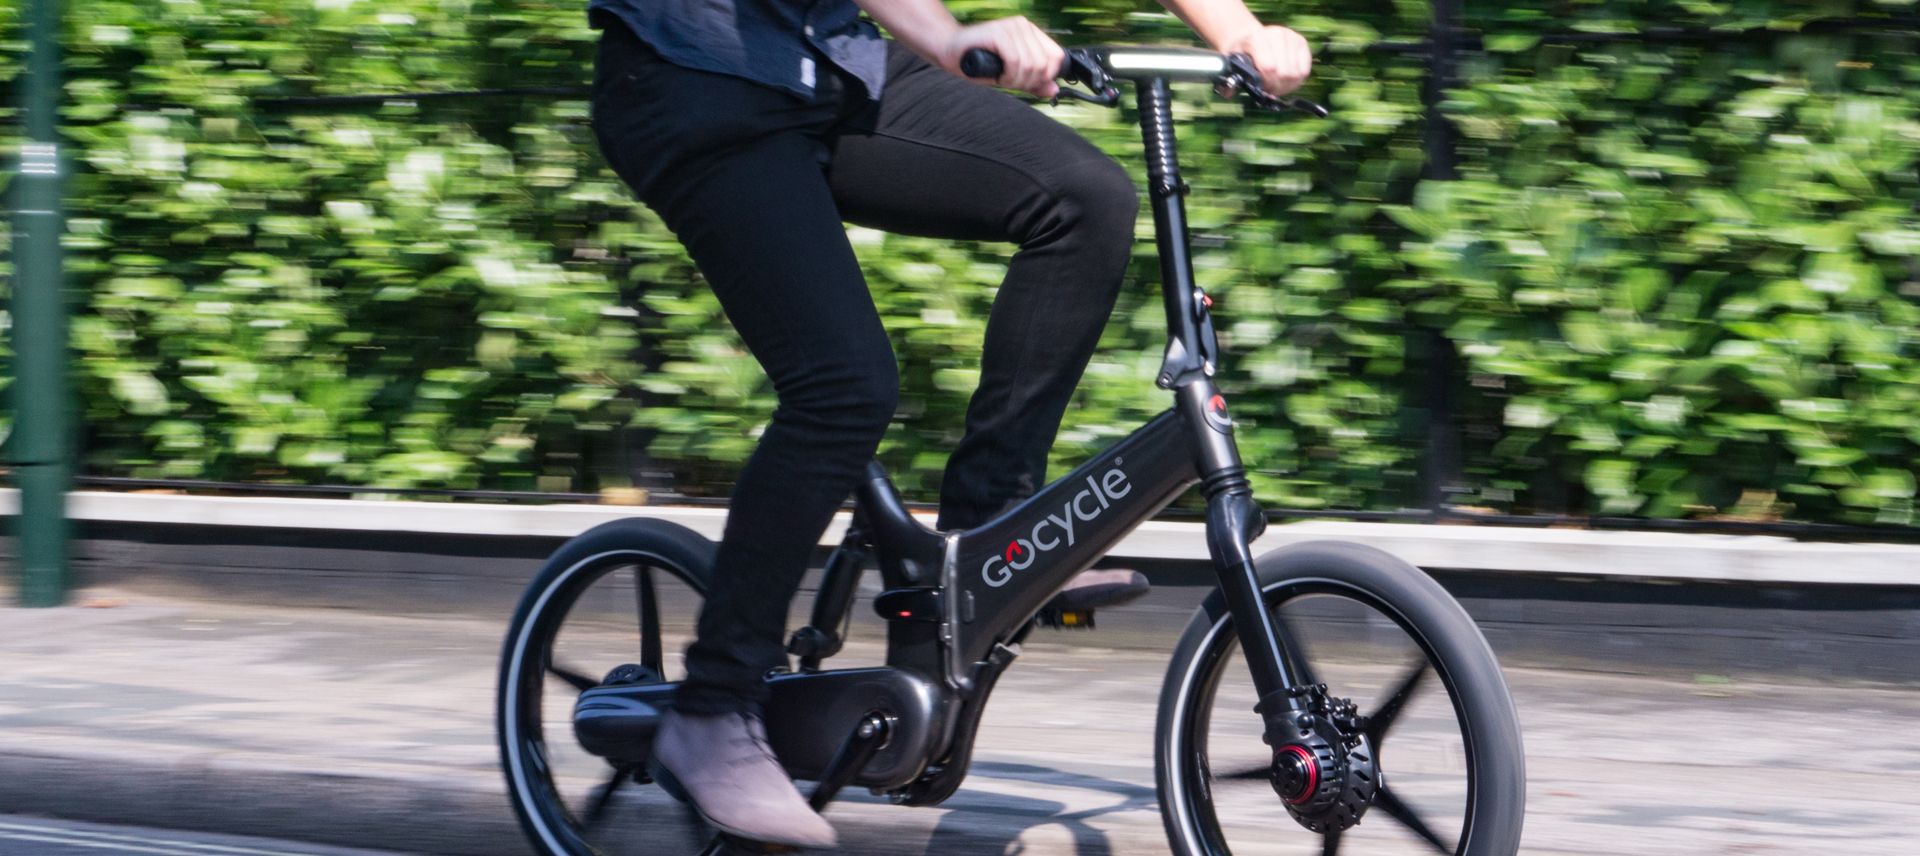 gxi gocycle